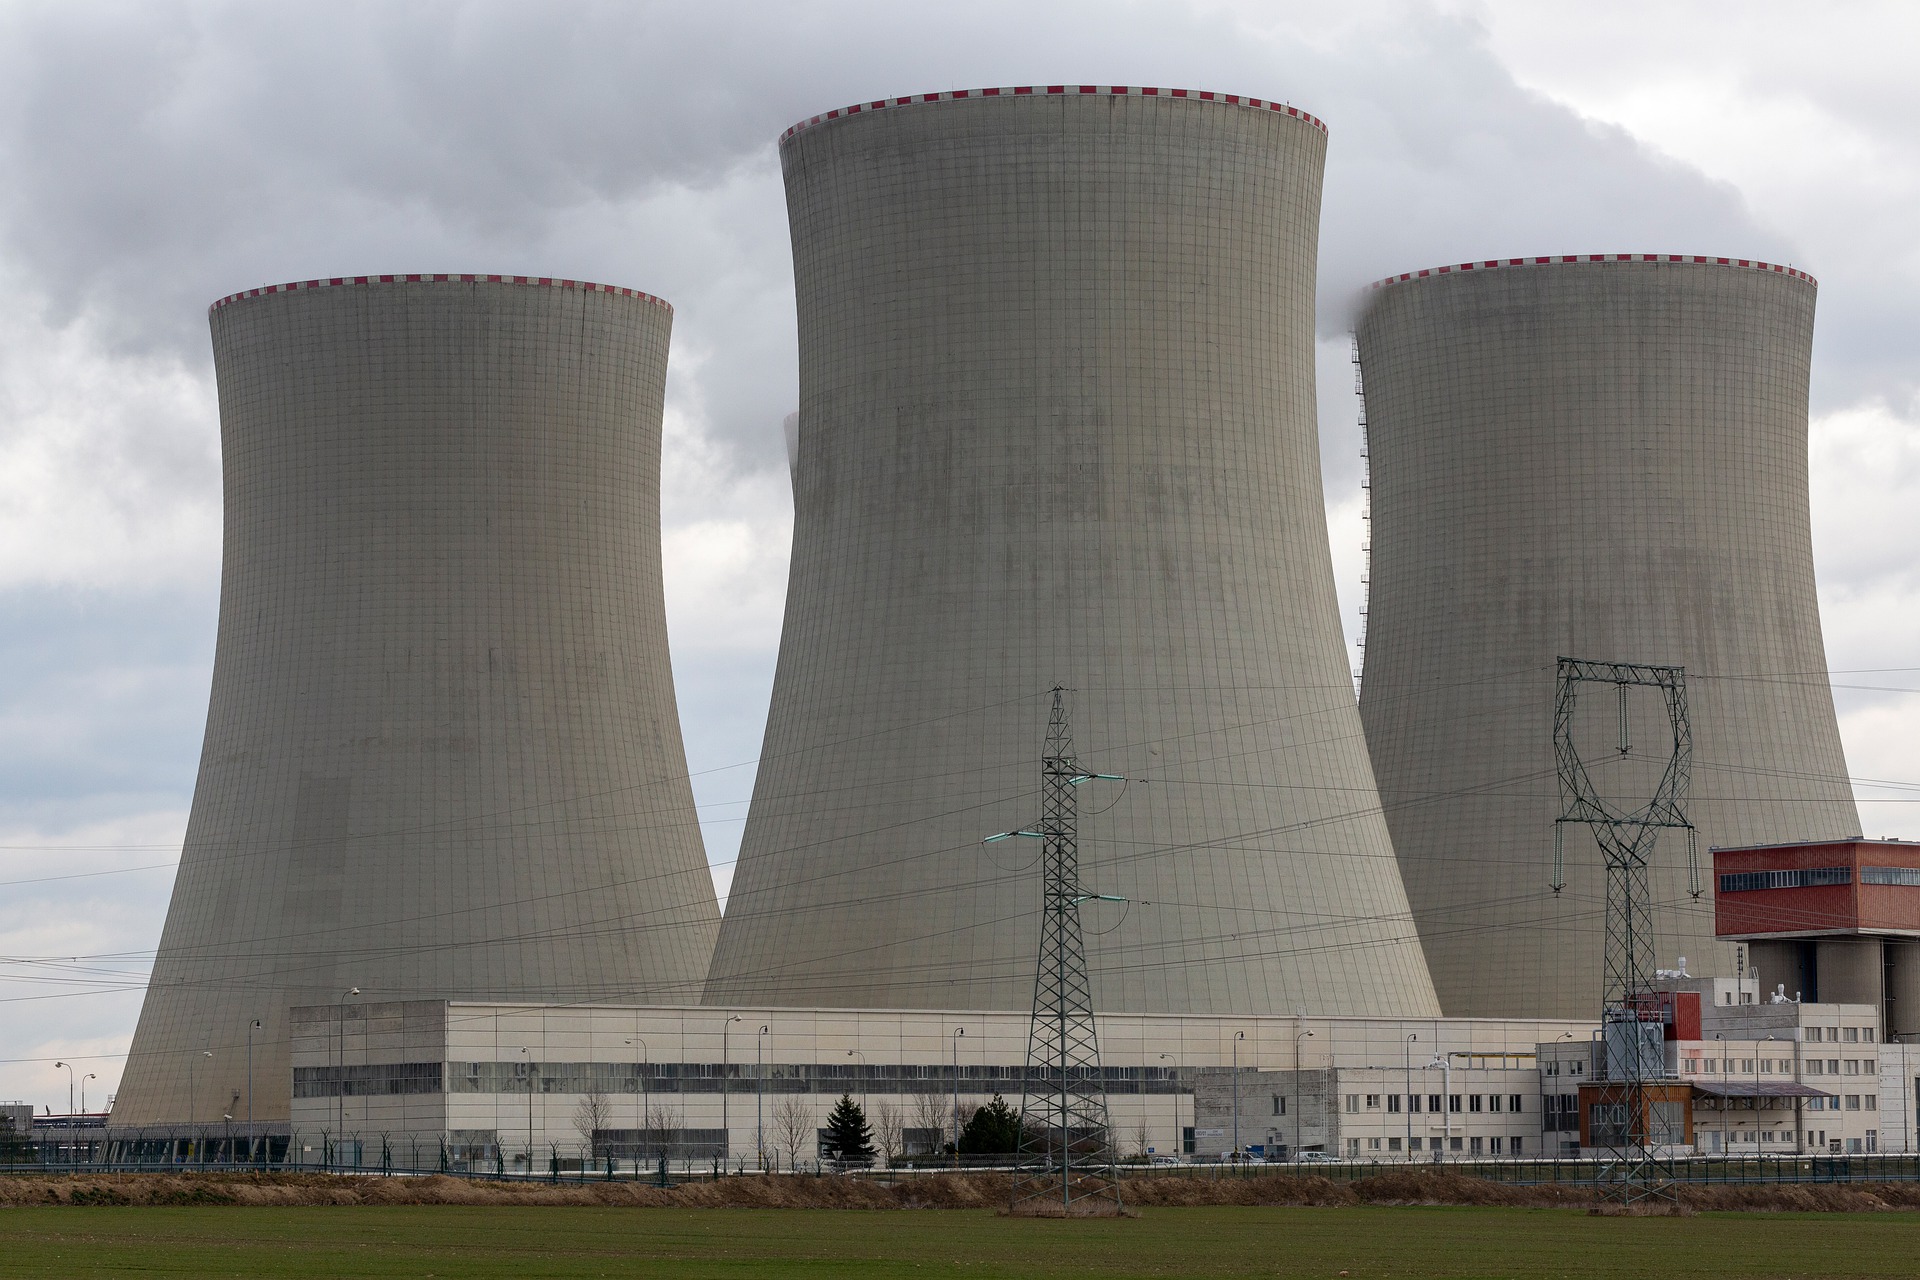 Kernkraftwerk mit drei Kühltürmen